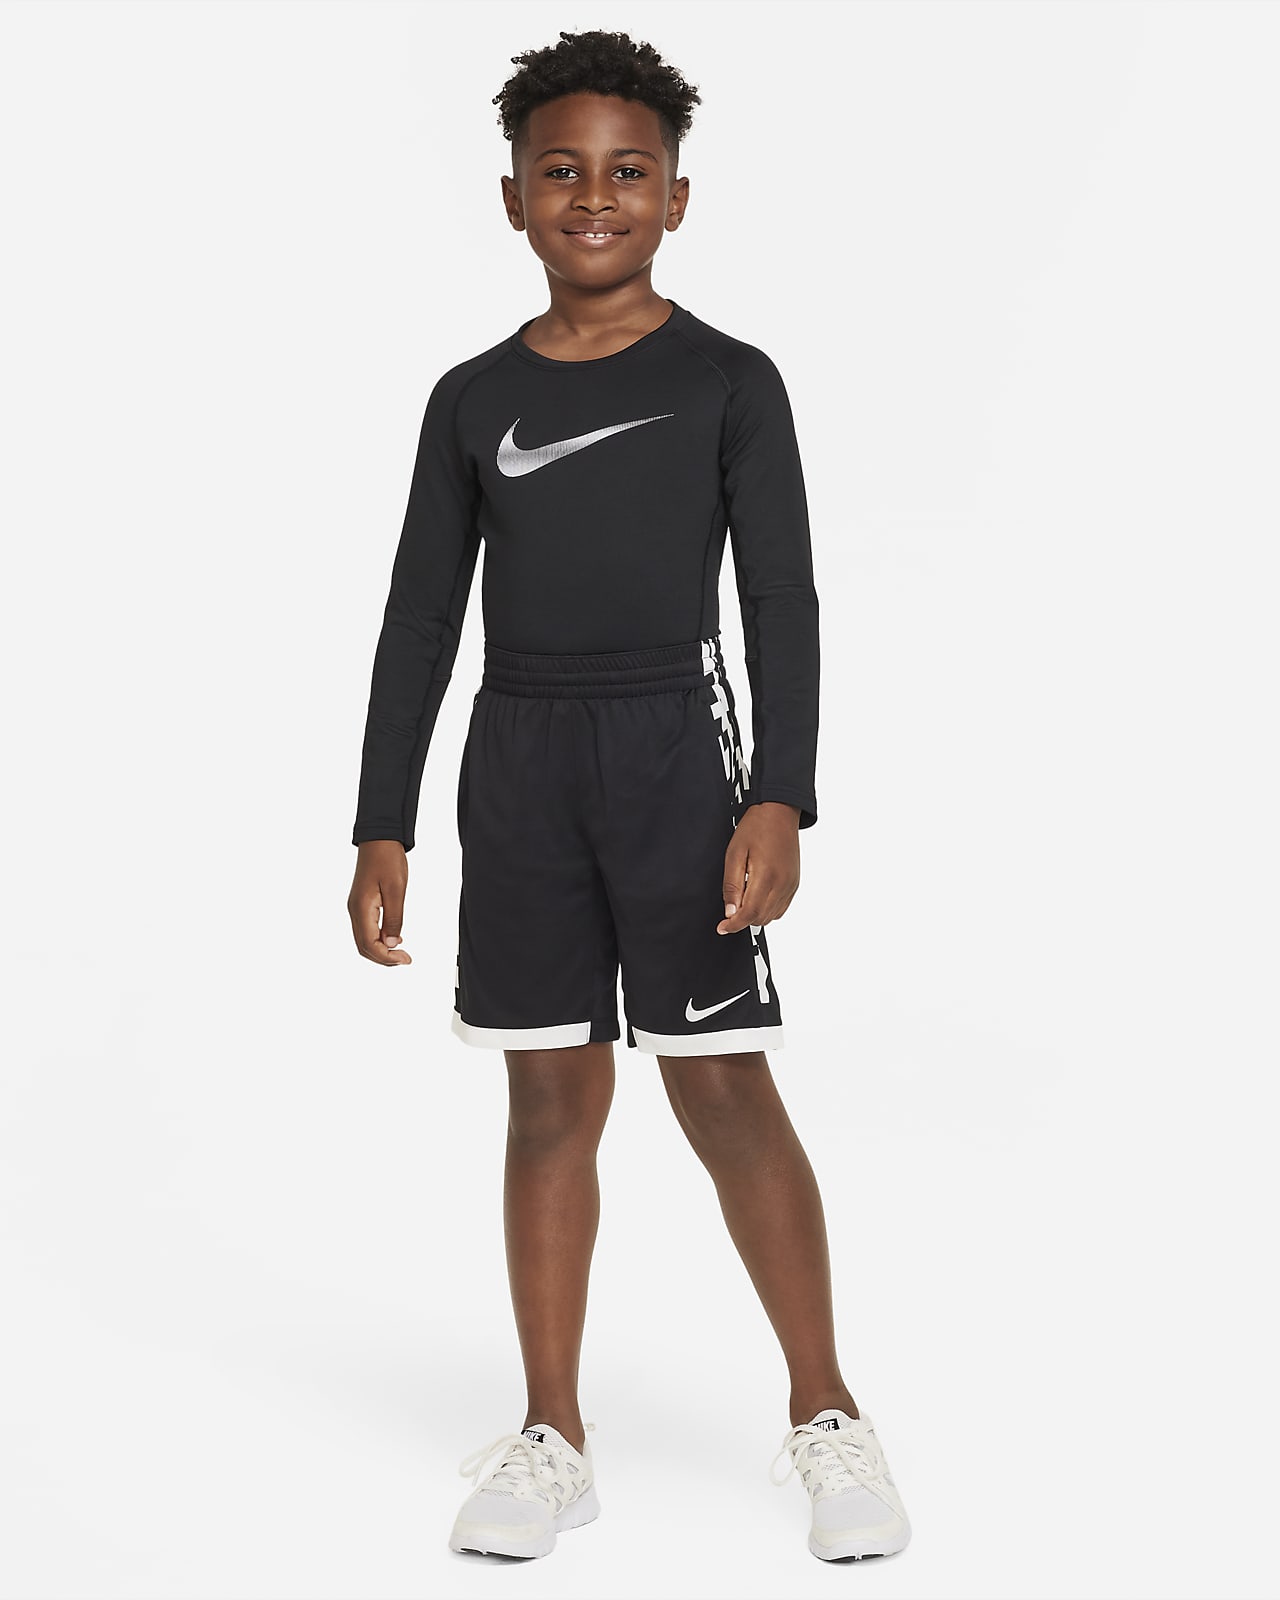 brink program fairy Nike Pro Warm Big Kids' (Boys') Long-Sleeve Top. Nike.com